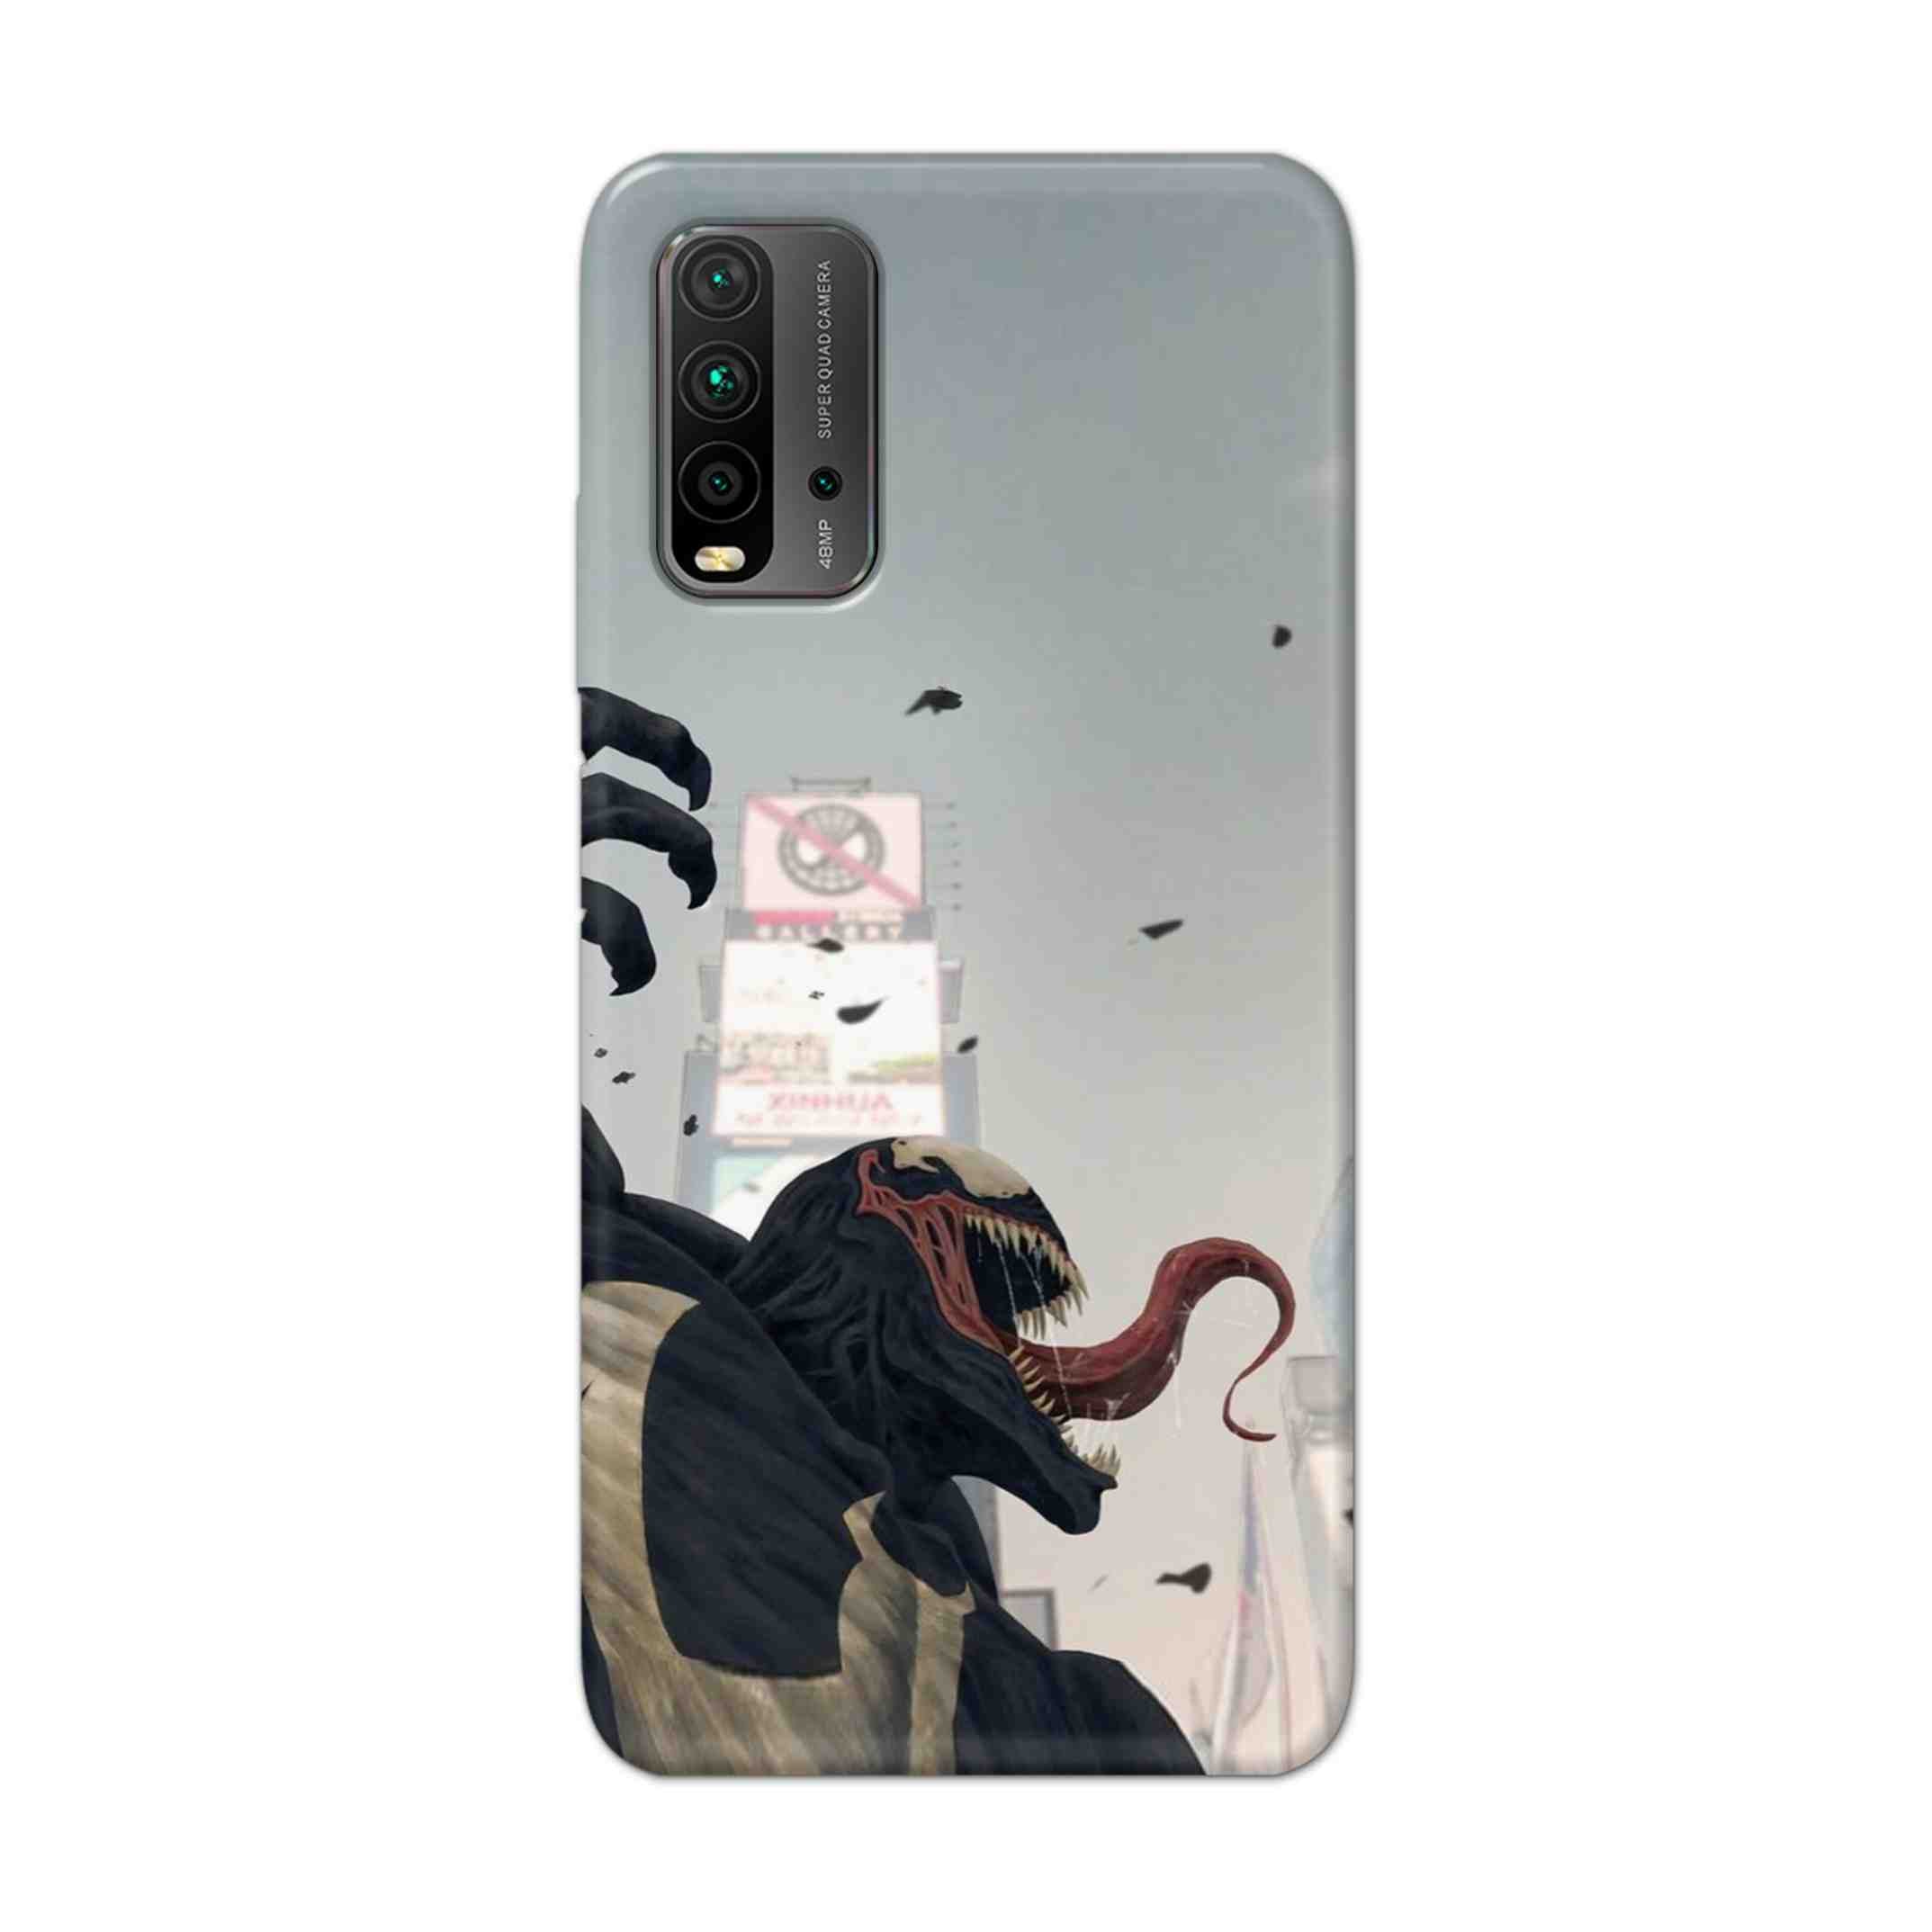 Buy Venom Crunch Hard Back Mobile Phone Case Cover For Redmi 9 Power Online